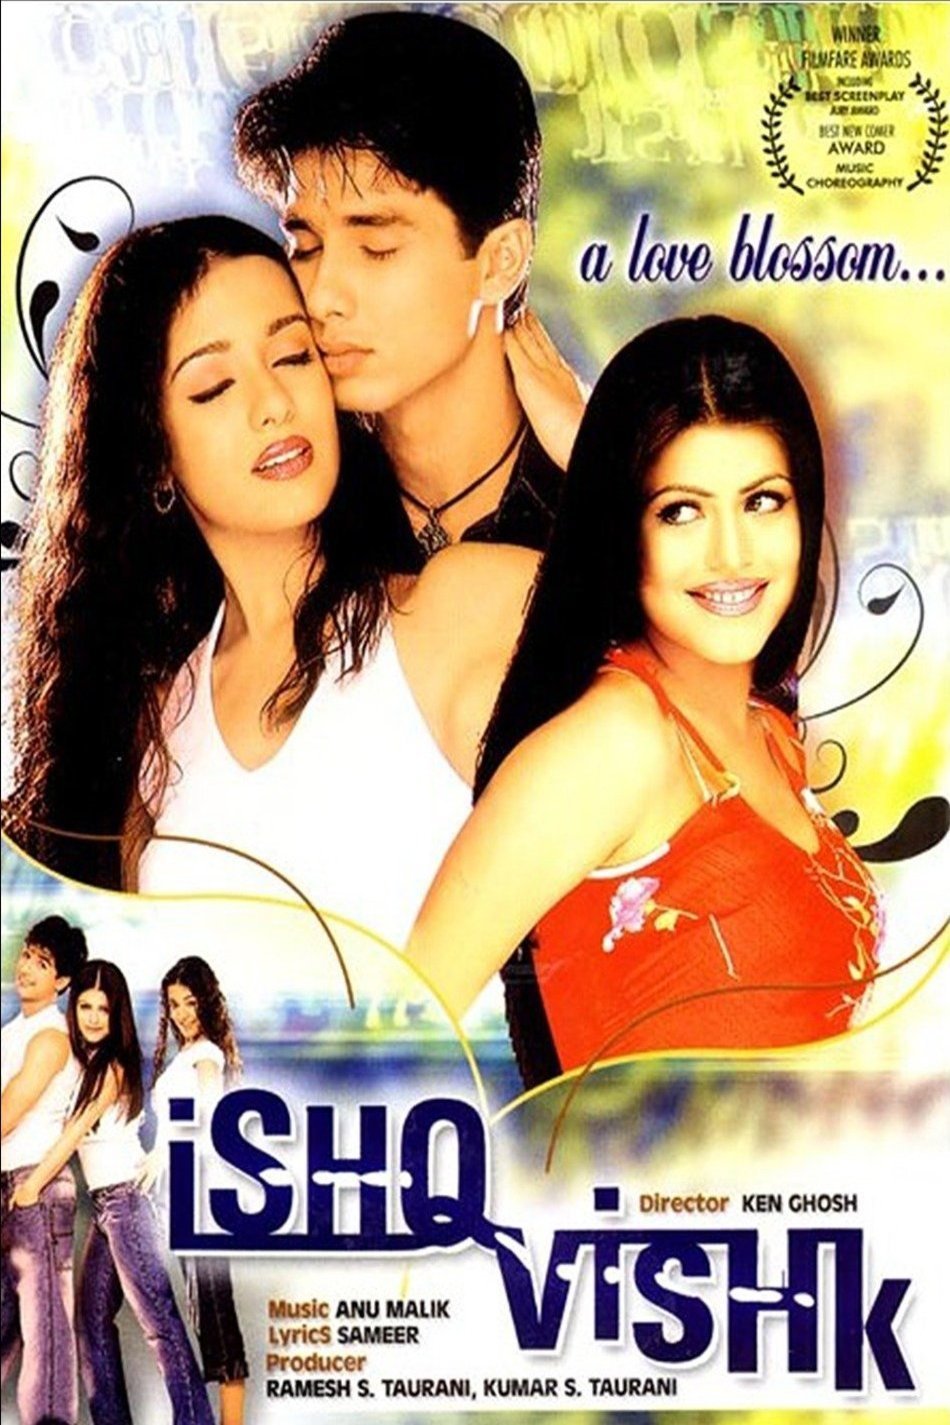 Hindi poster of the movie Ishq Vishk